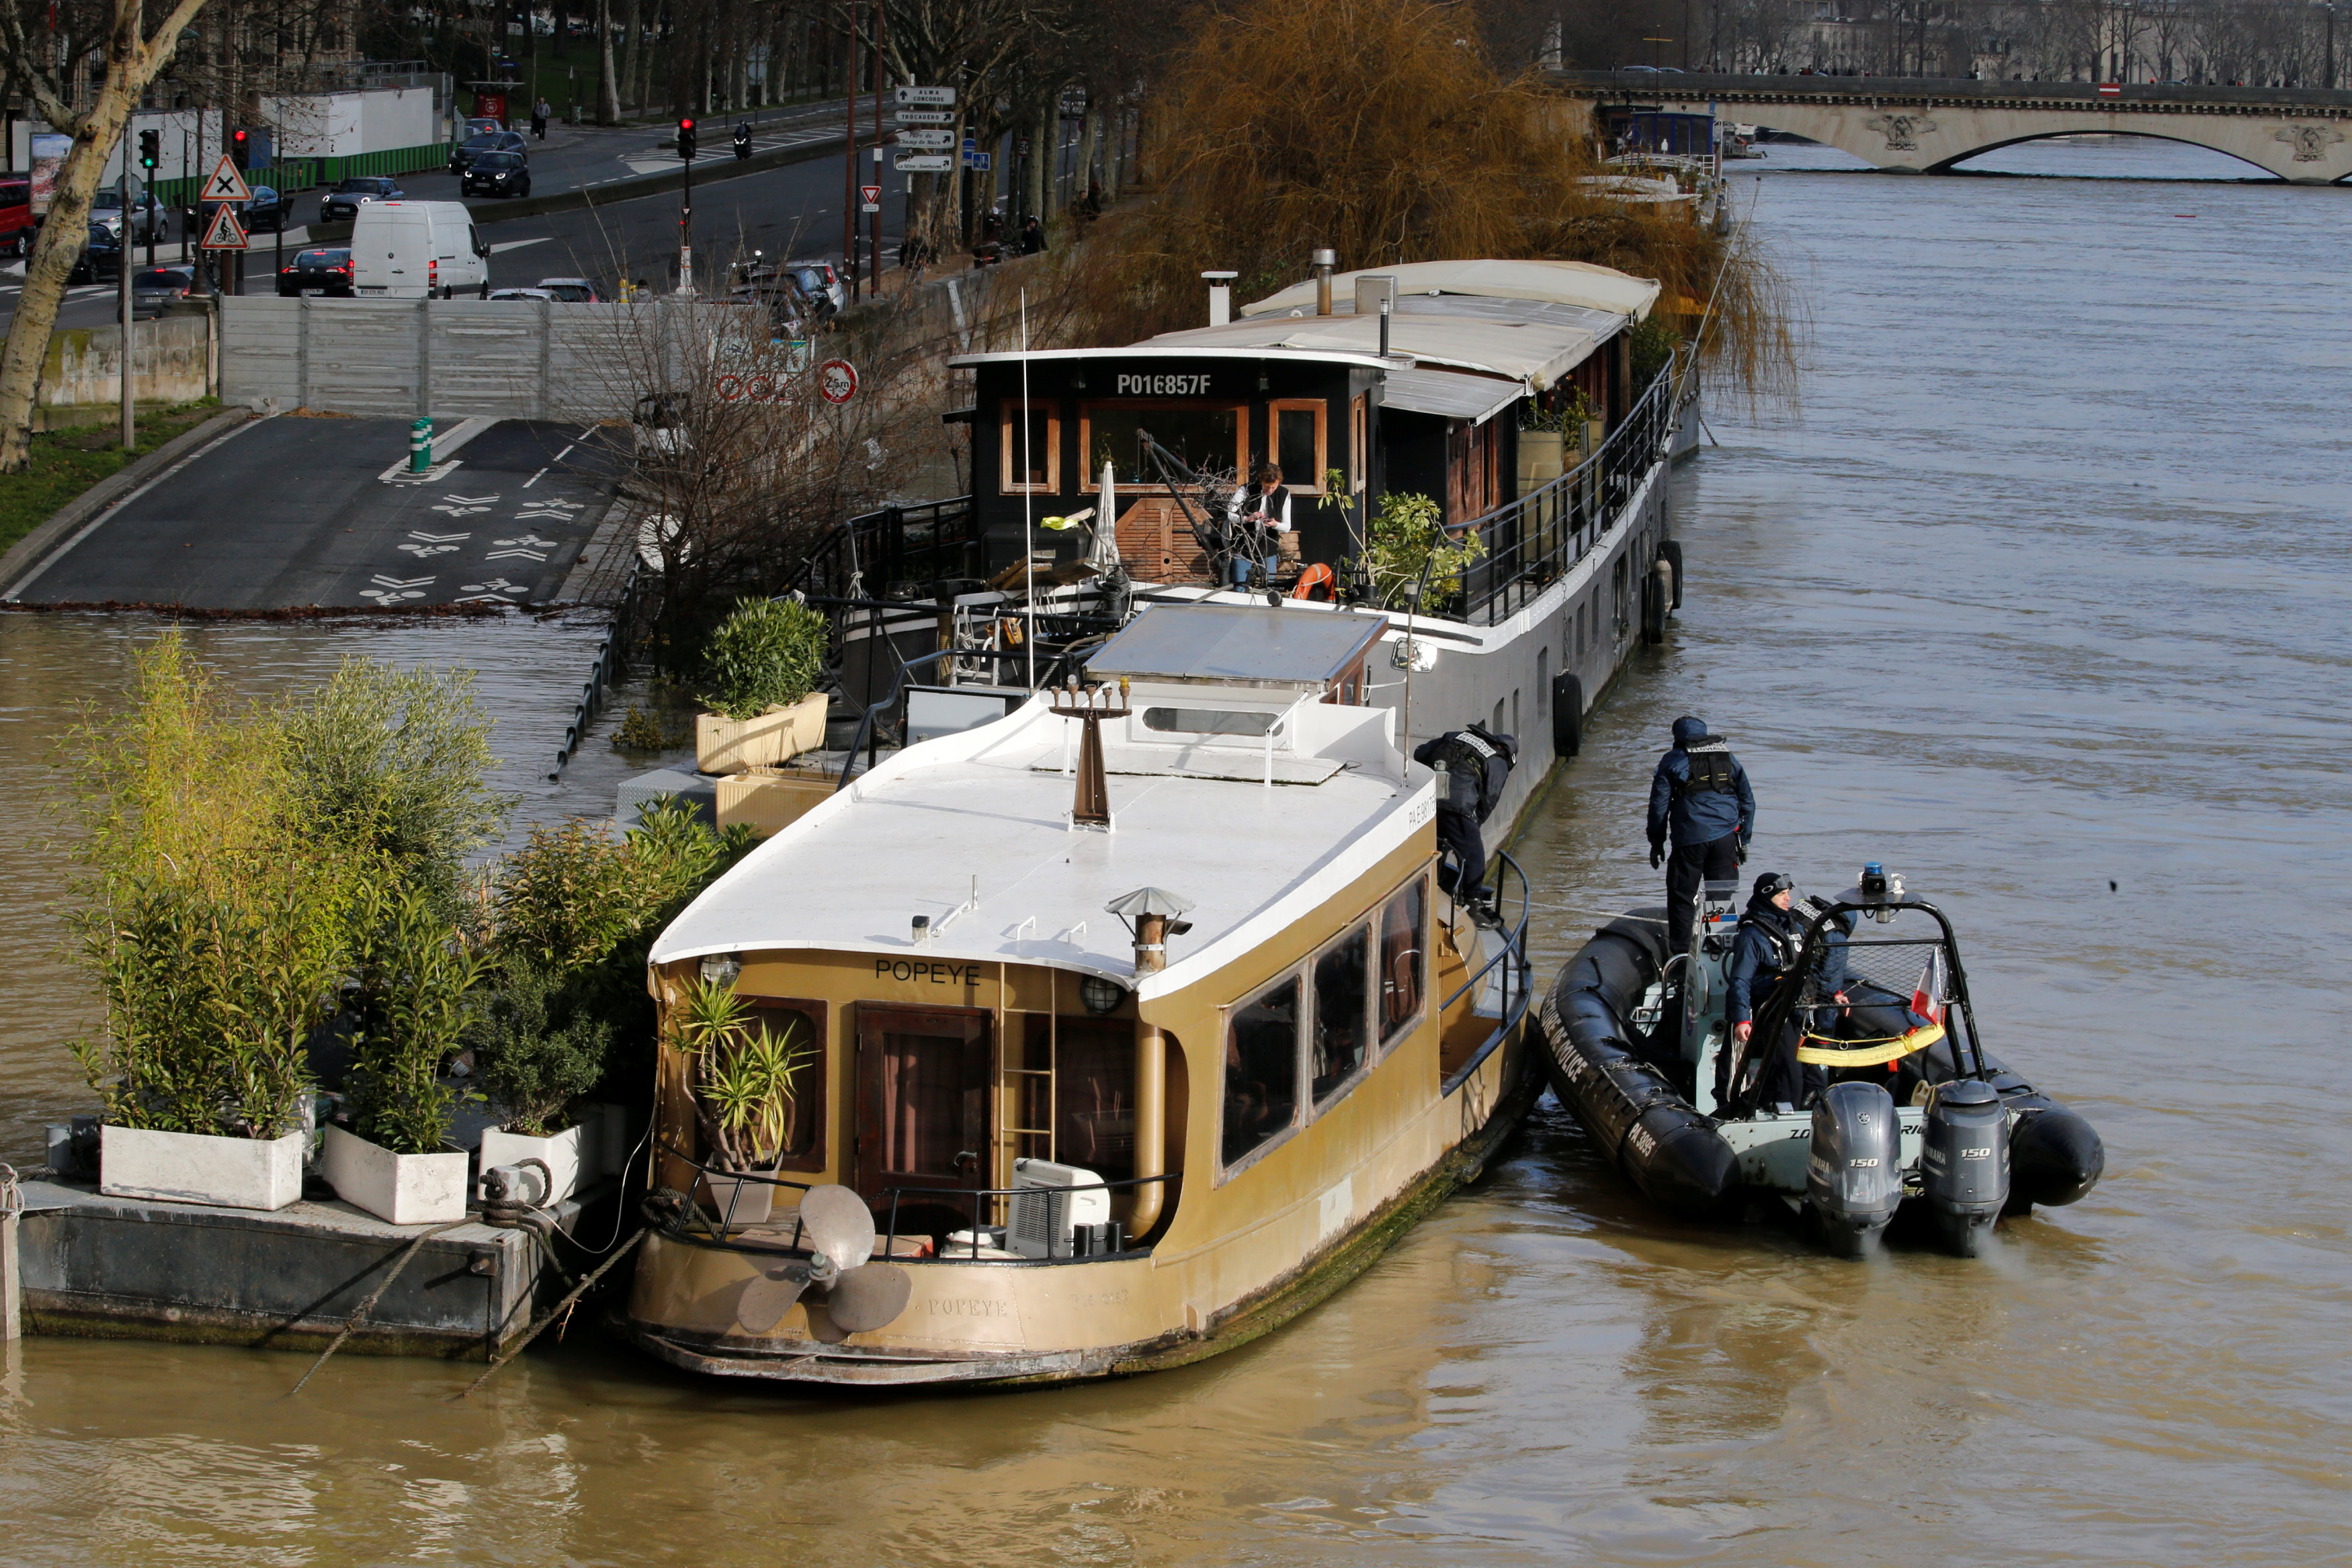 River Seine levels rise further as Paris braces for major flooding risk